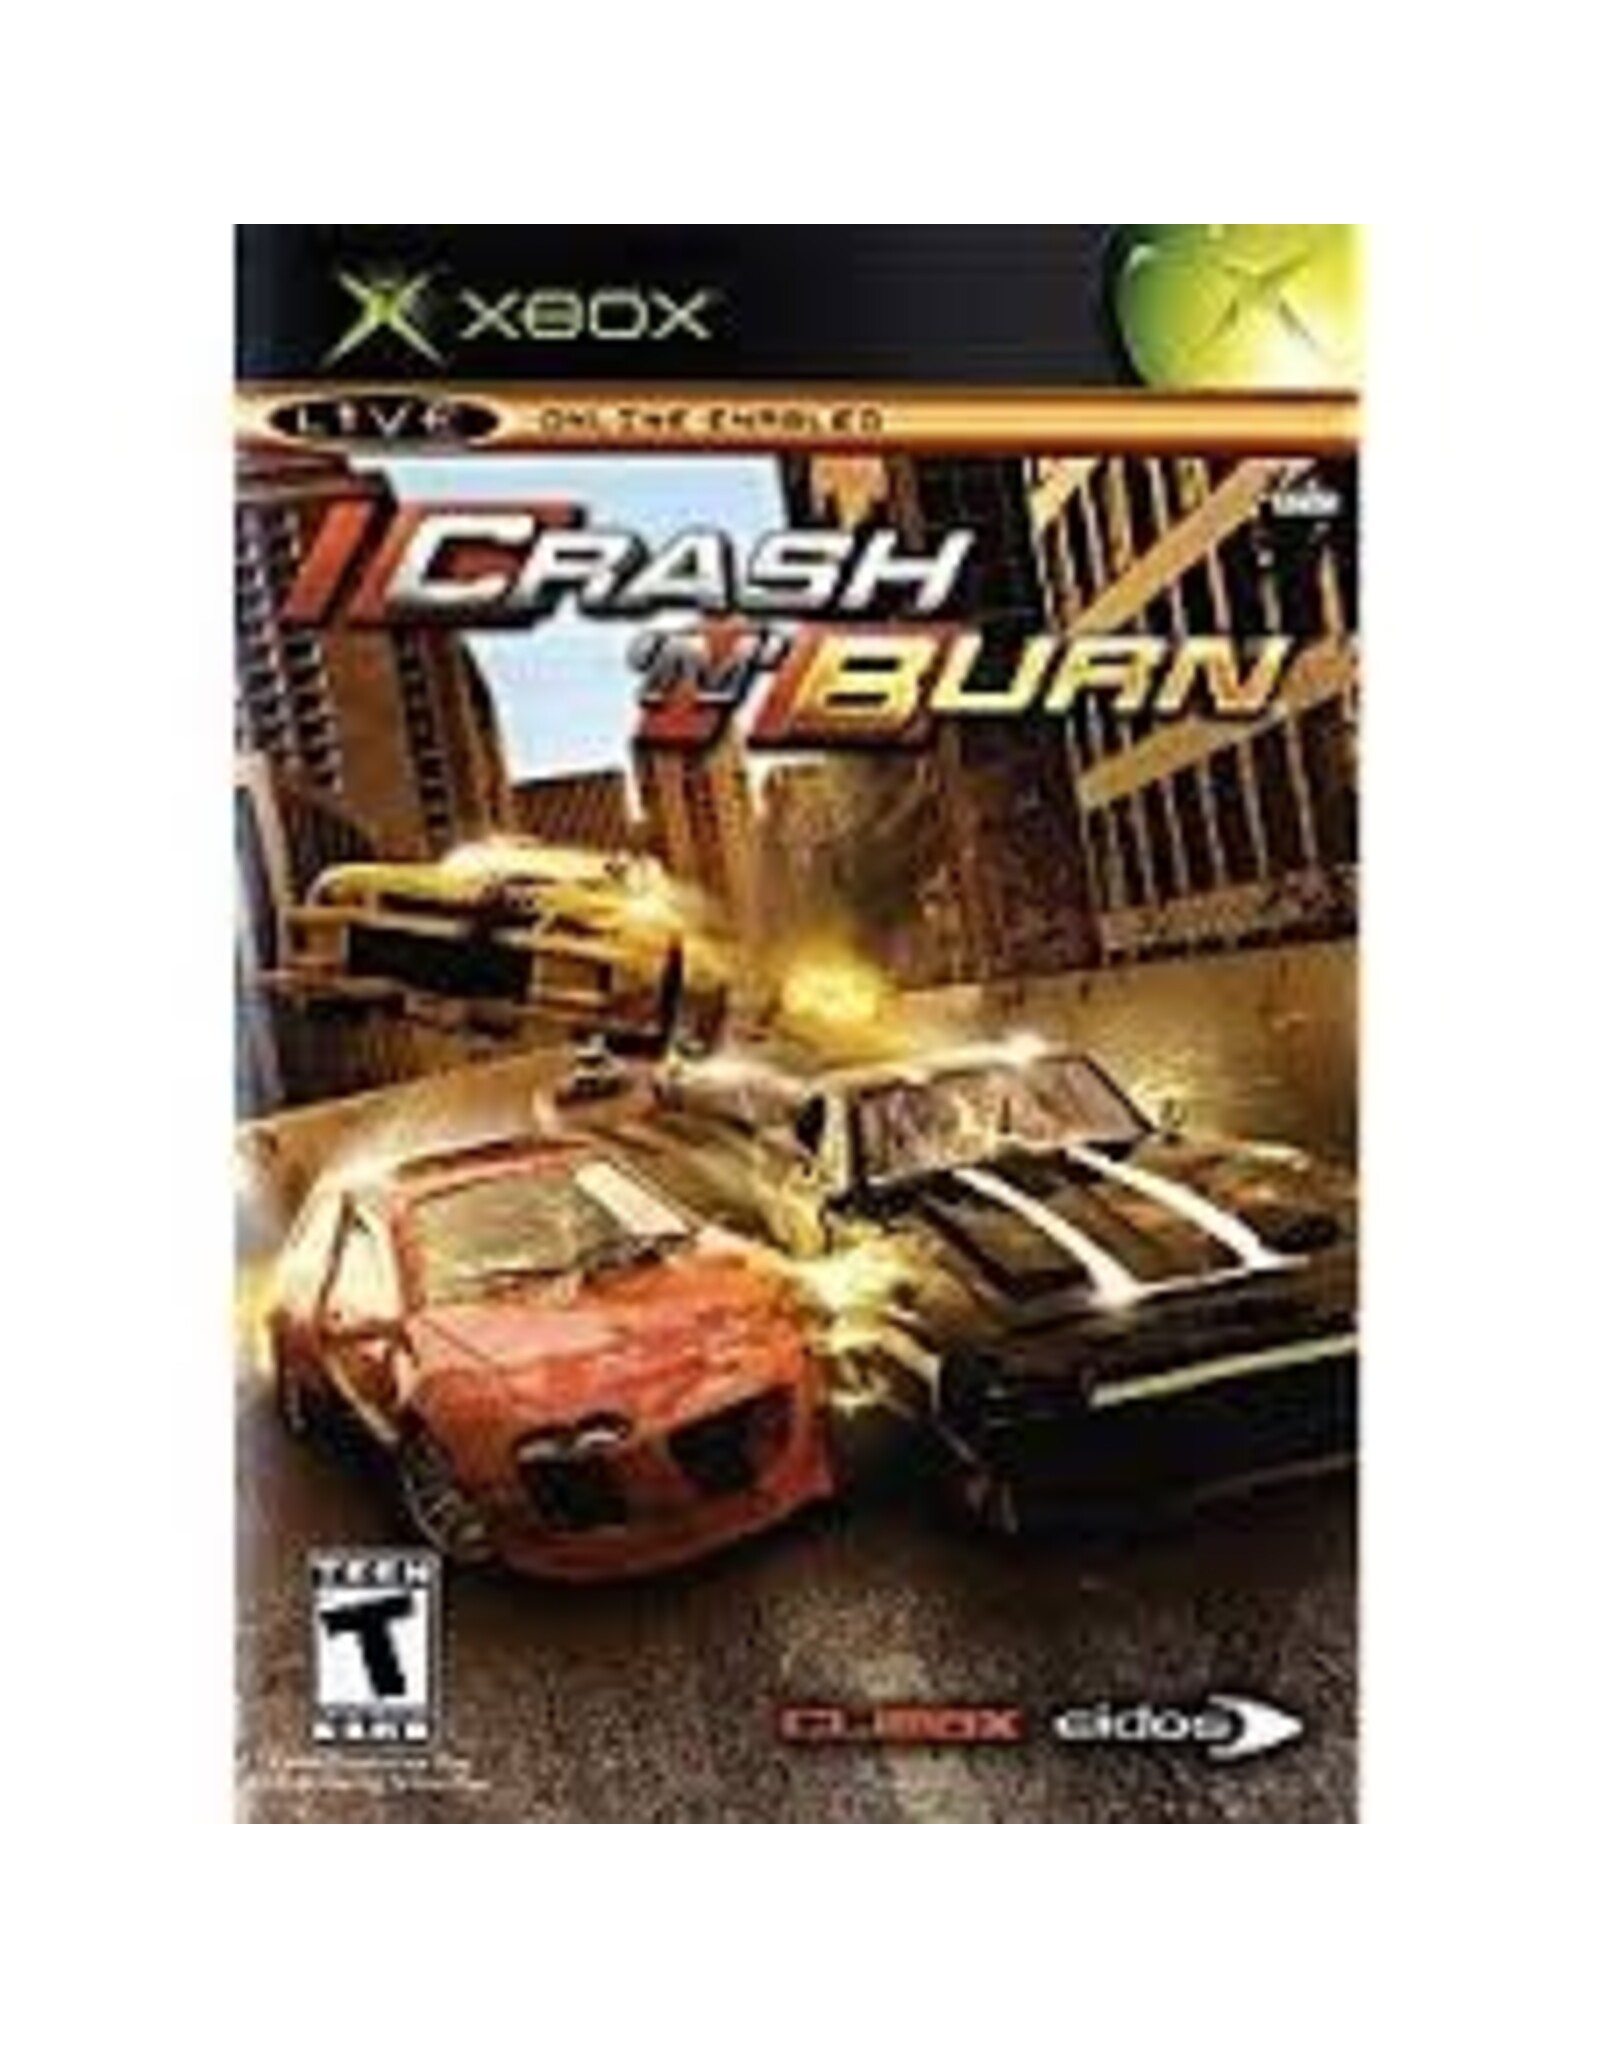 Xbox Crash N Burn (No Manual)